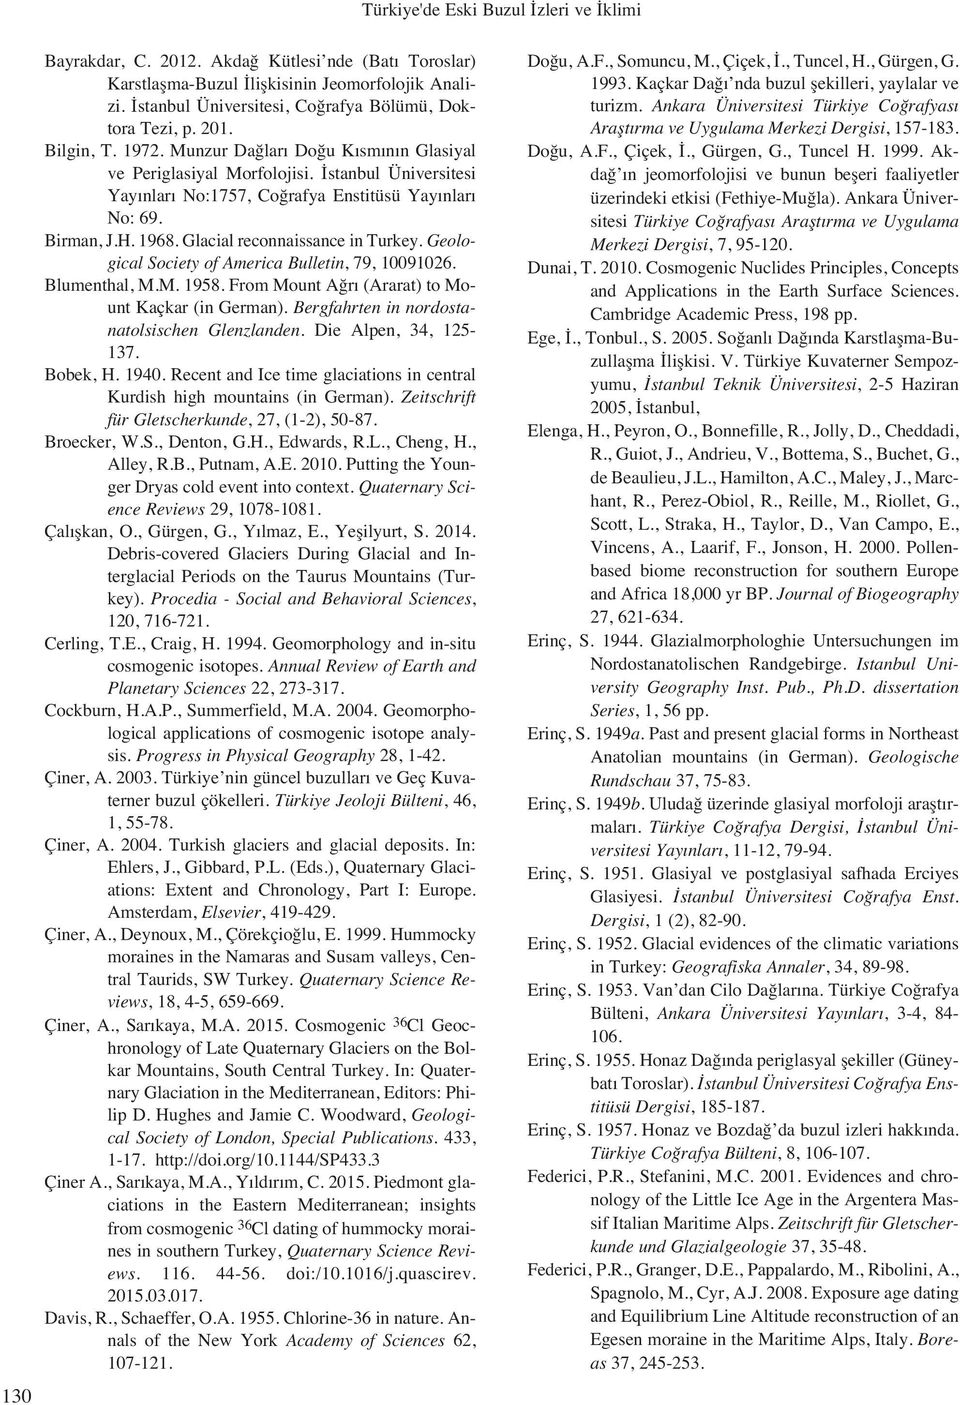 stanbul Üniversitesi Yay nlar No:1757, Co rafya Enstitüsü Yay nlar No: 69. Birman, J.H. 1968. Glacial reconnaissance in Turkey. Geological Society of America Bulletin, 79, 10091026. Blumenthal, M.